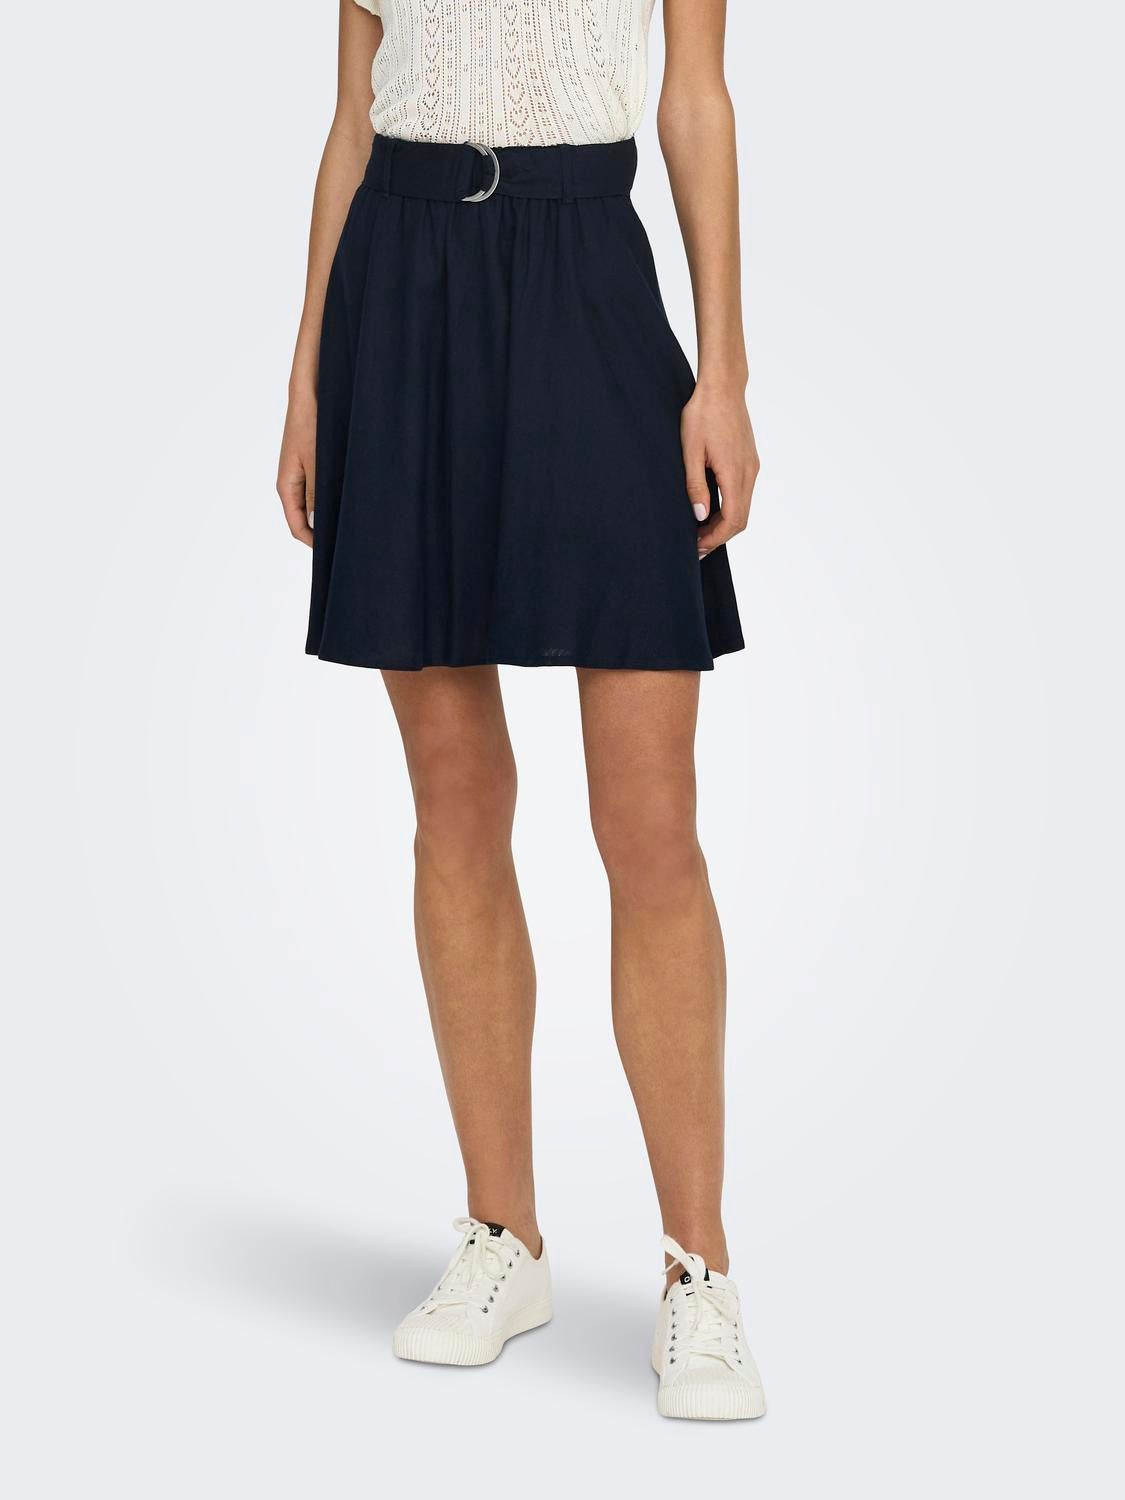 John Lewis Girls' Adjustable Waist Stain Resistant A-Line School Skirt, Navy  at John Lewis & Partners